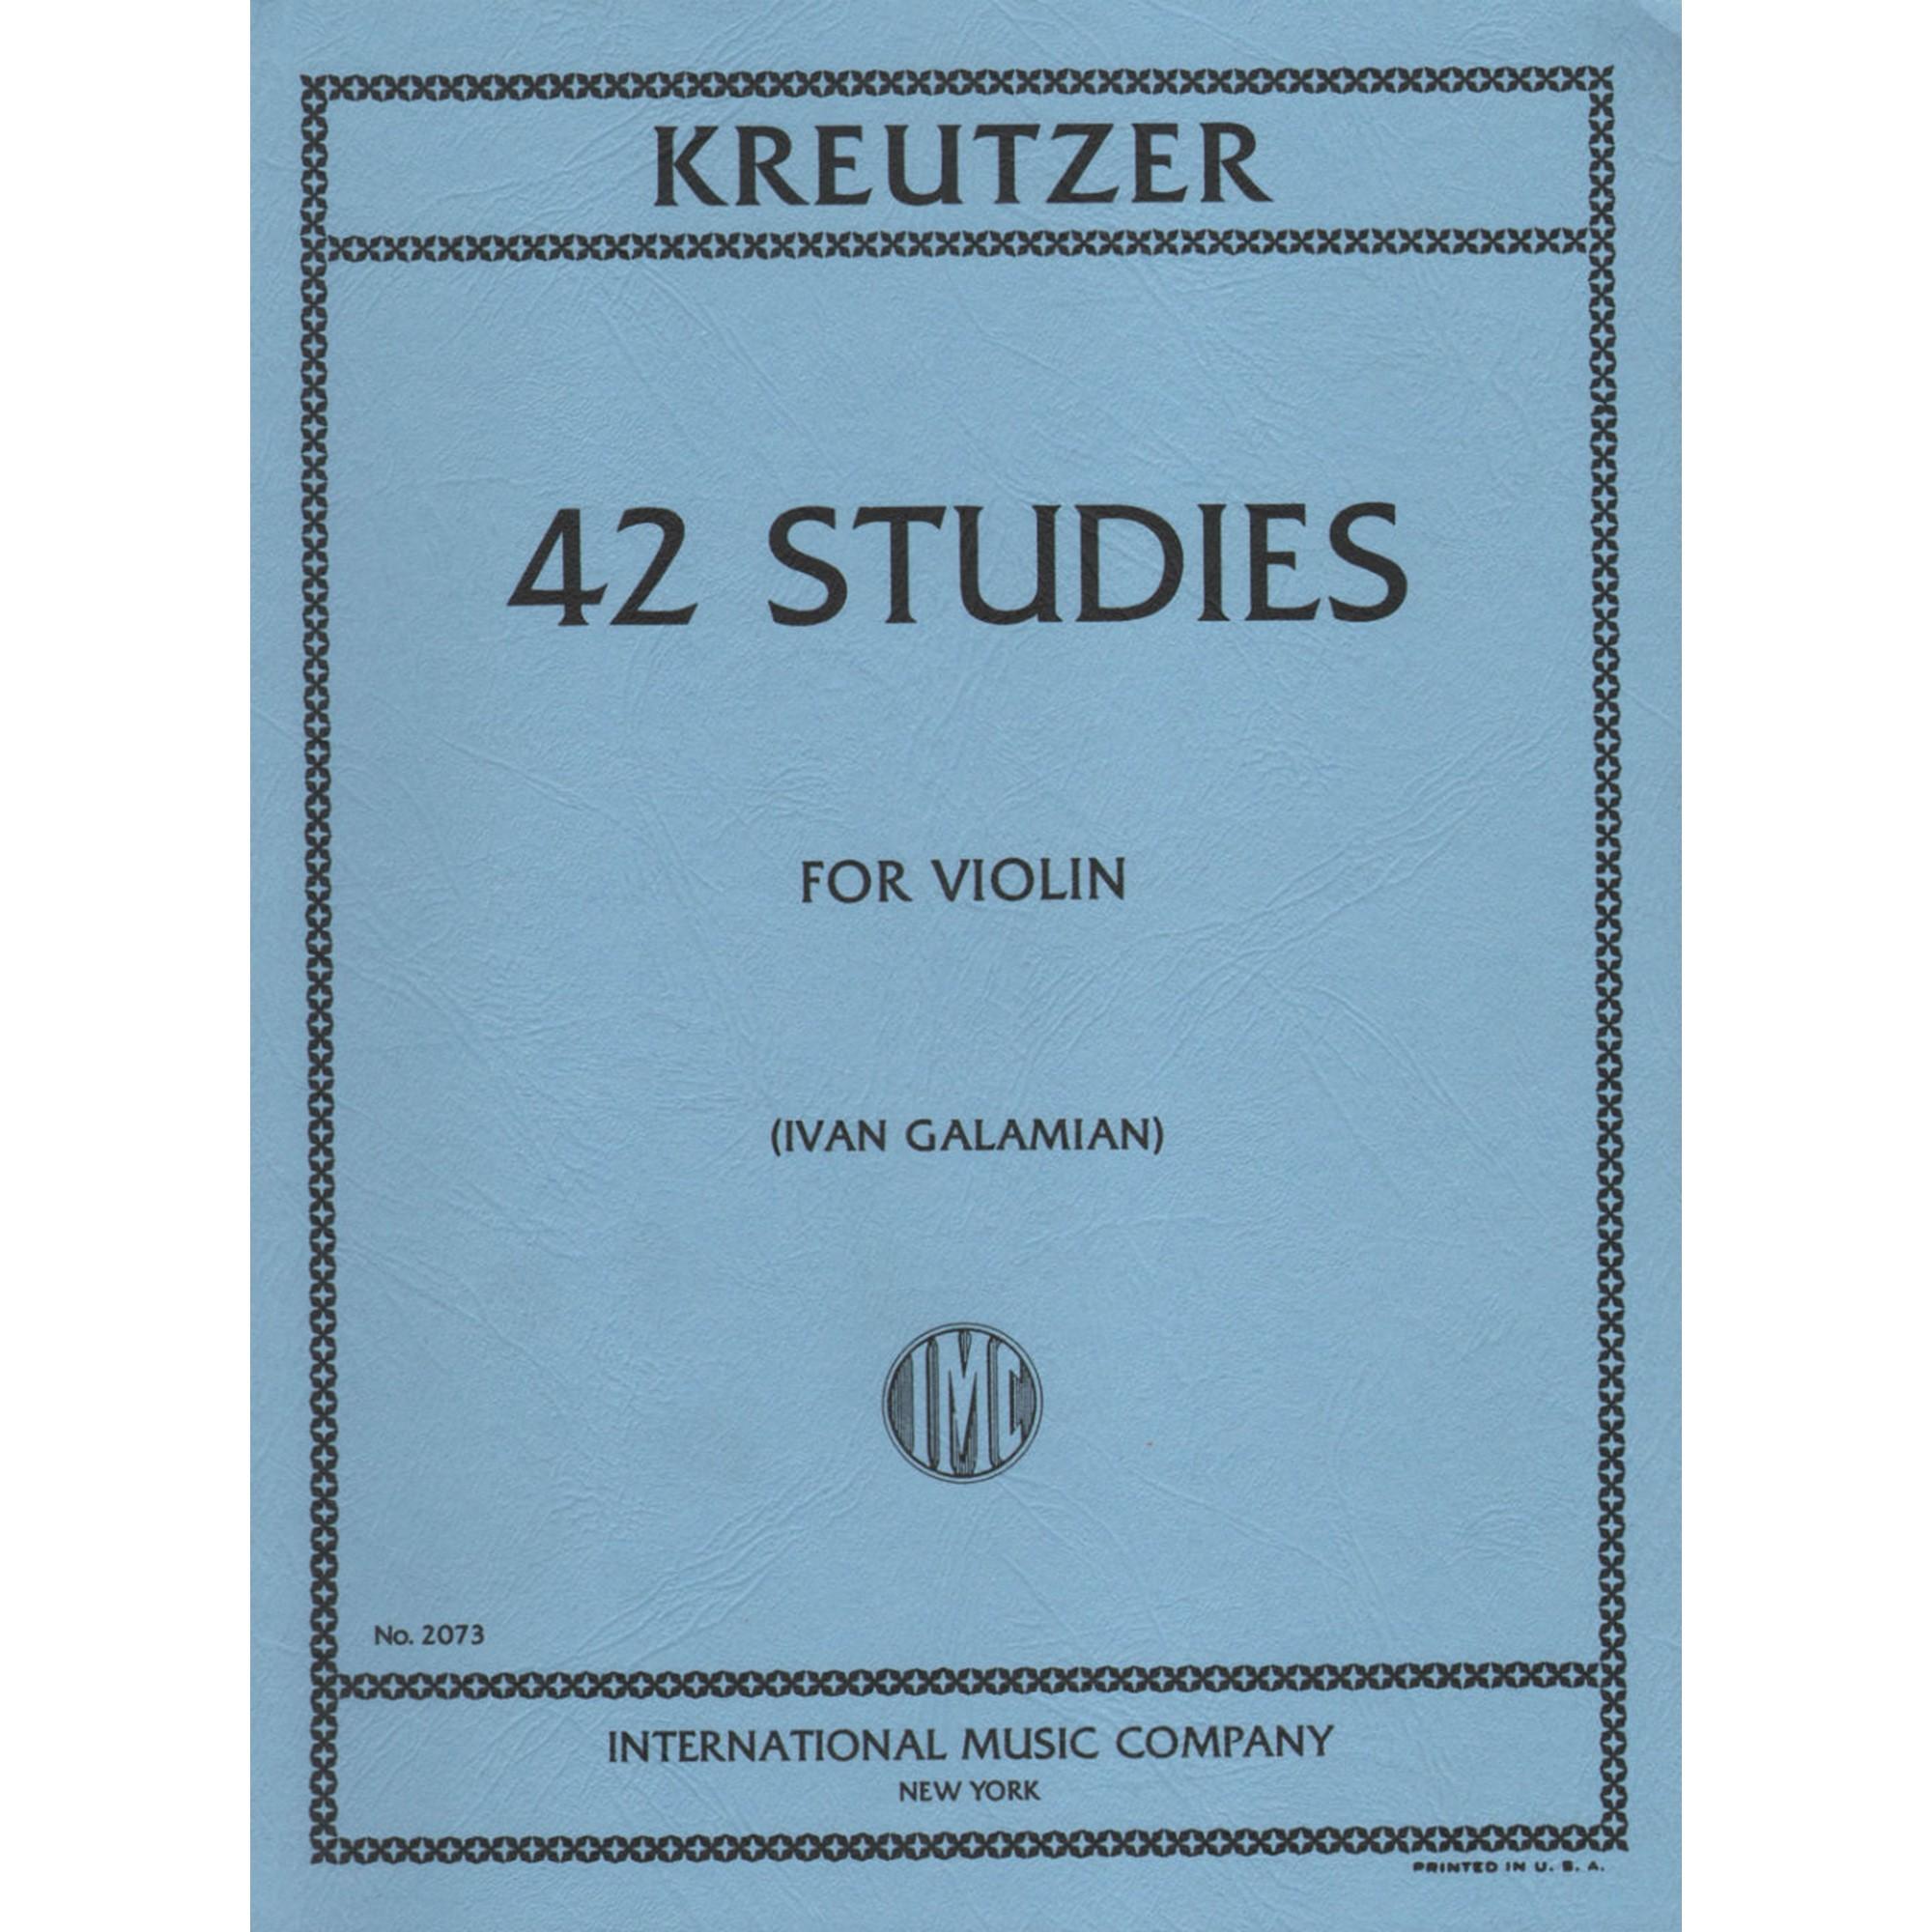 Kreutzer 42 Studies for Violin (Ivan Galamian) - International Music Company 